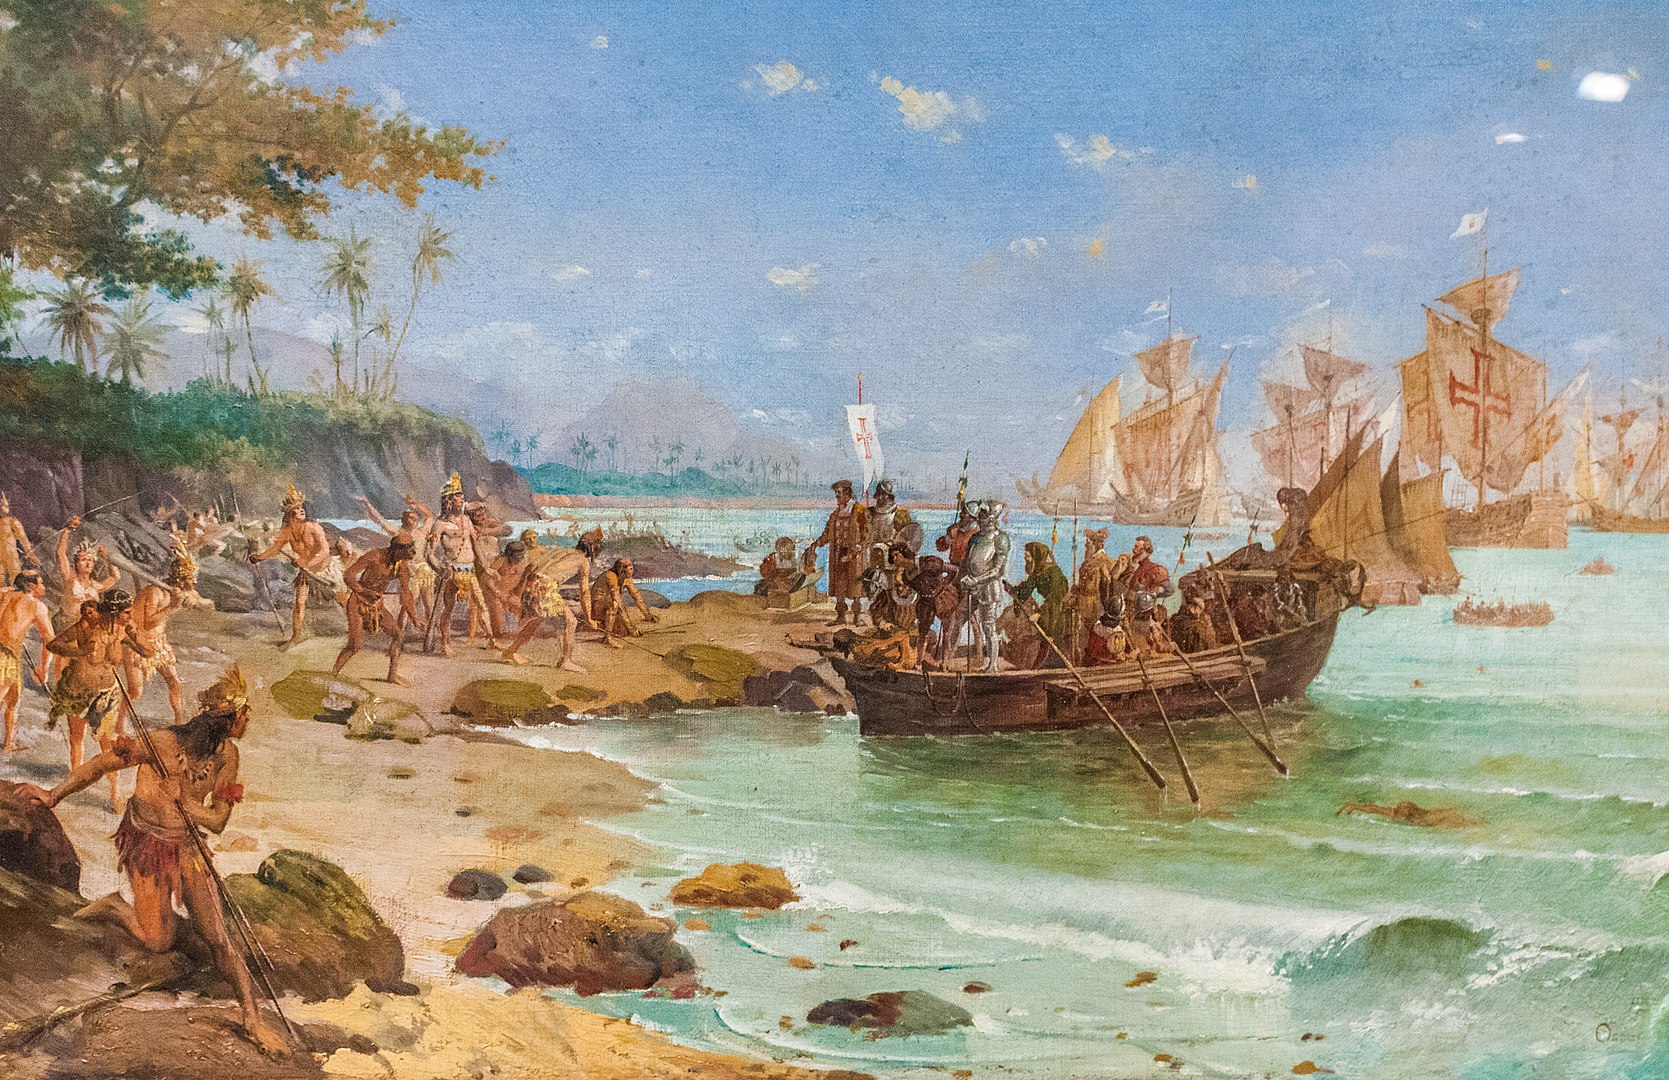 14 de mayo del 1500 Portugal afianzaba oficialmente su dominio sobre Brasil